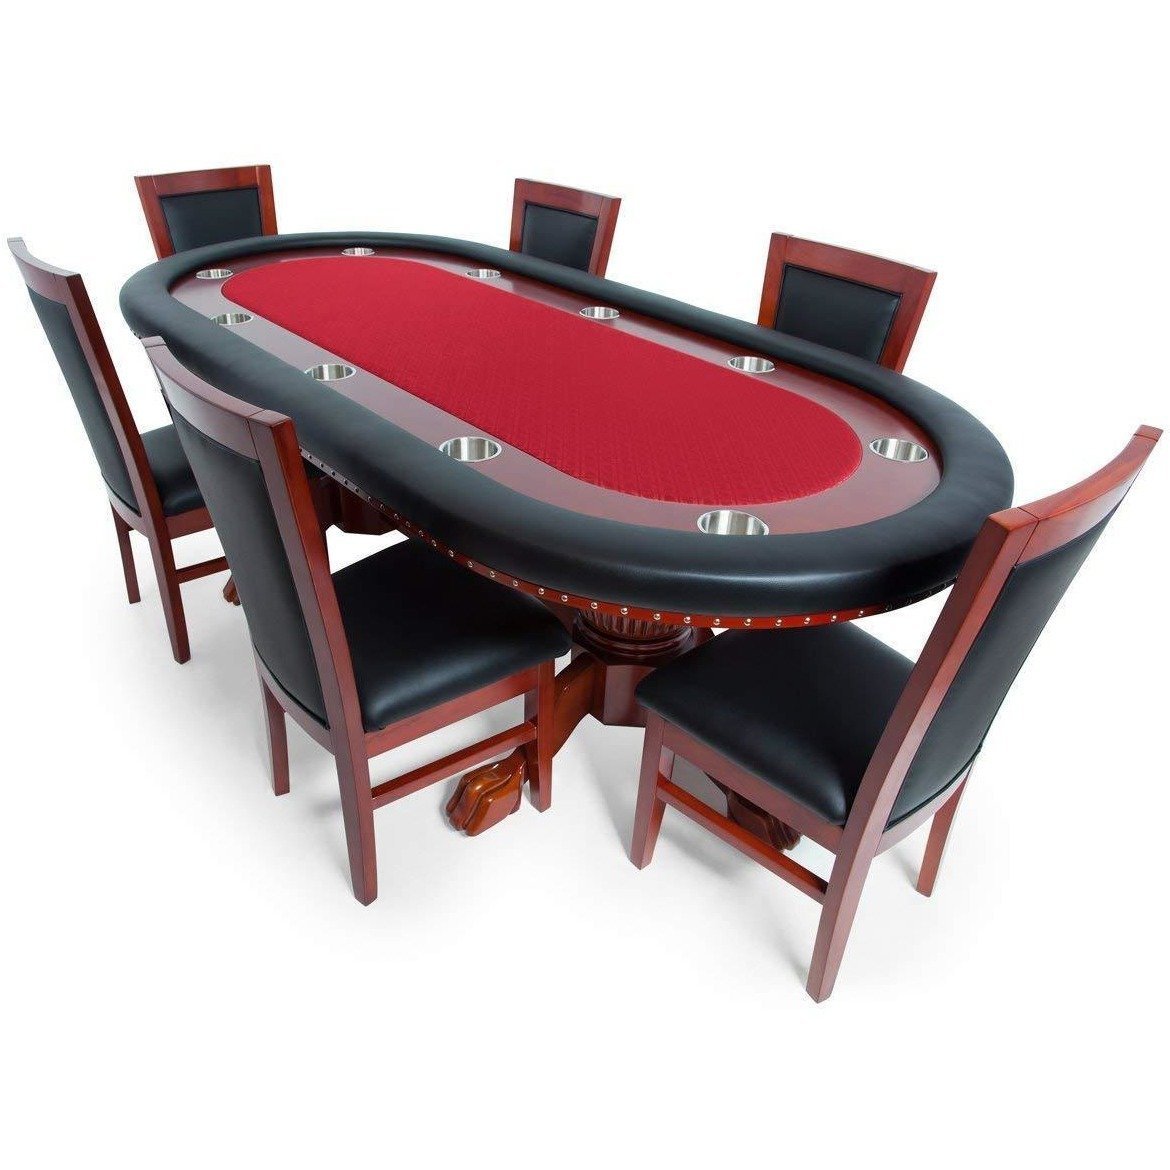 BBO Poker Tables Mahogany Classic Poker Dining Chair Set - Just Poker Tables